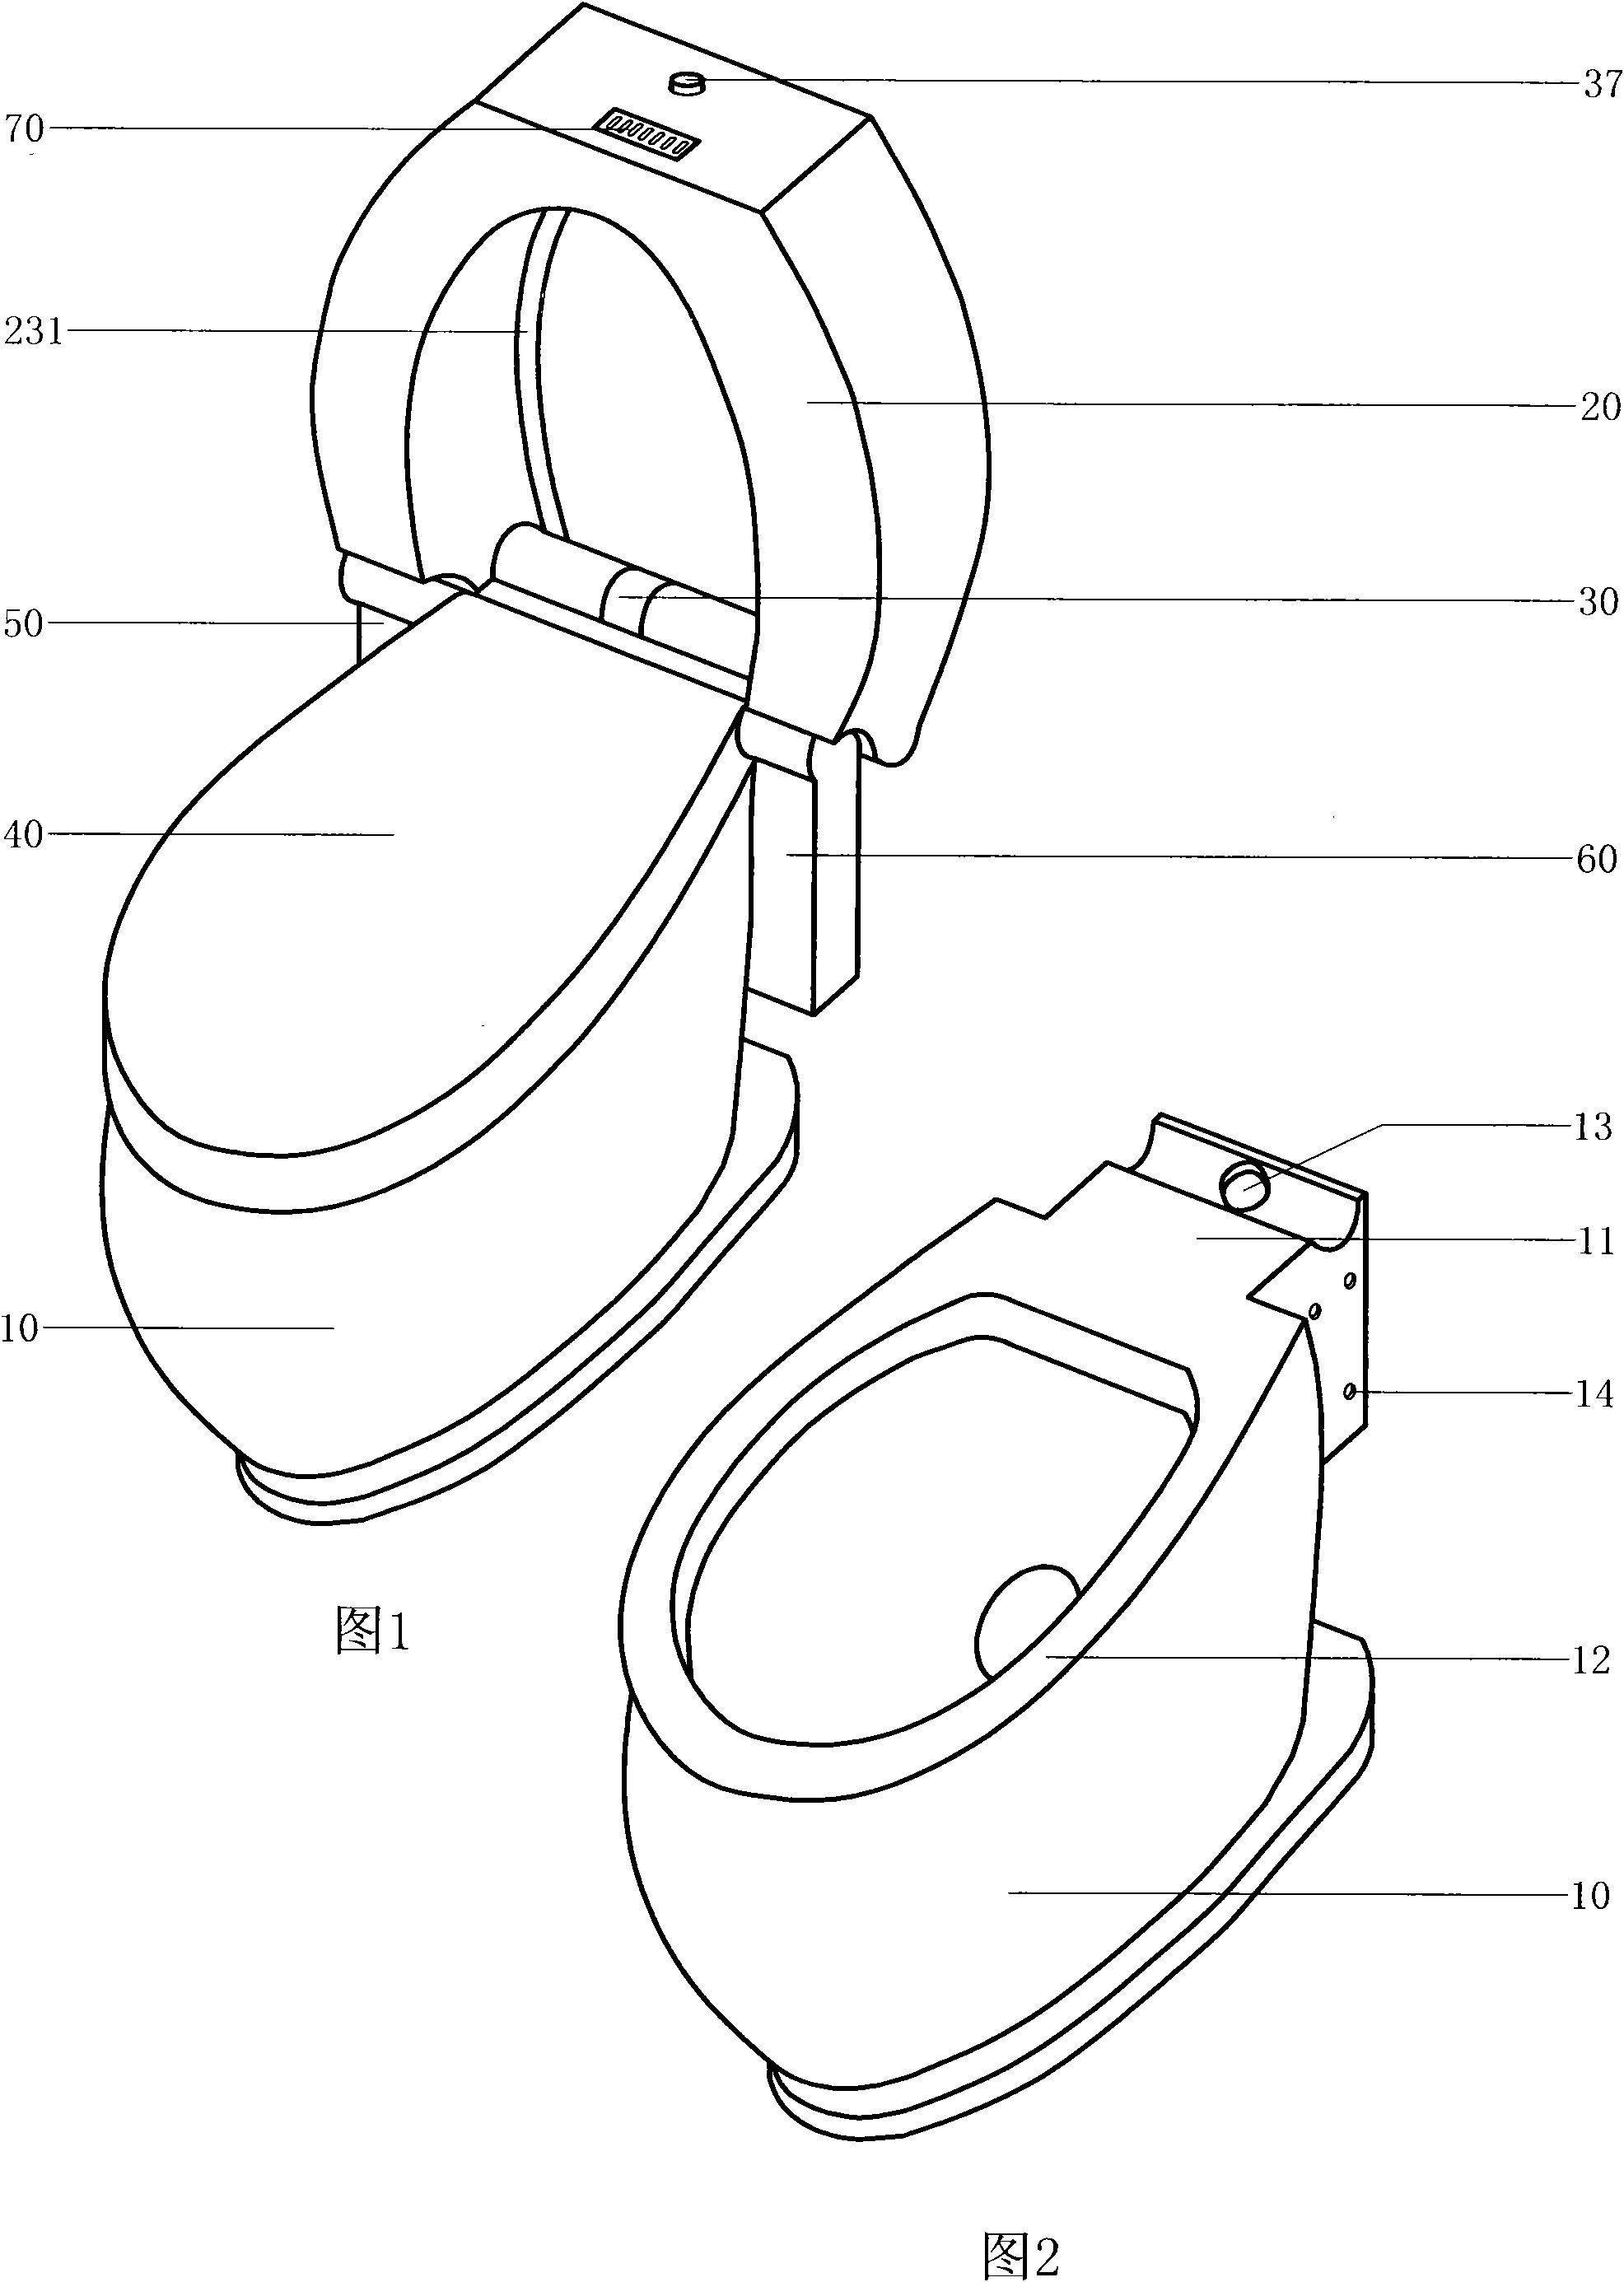 Combined toilet